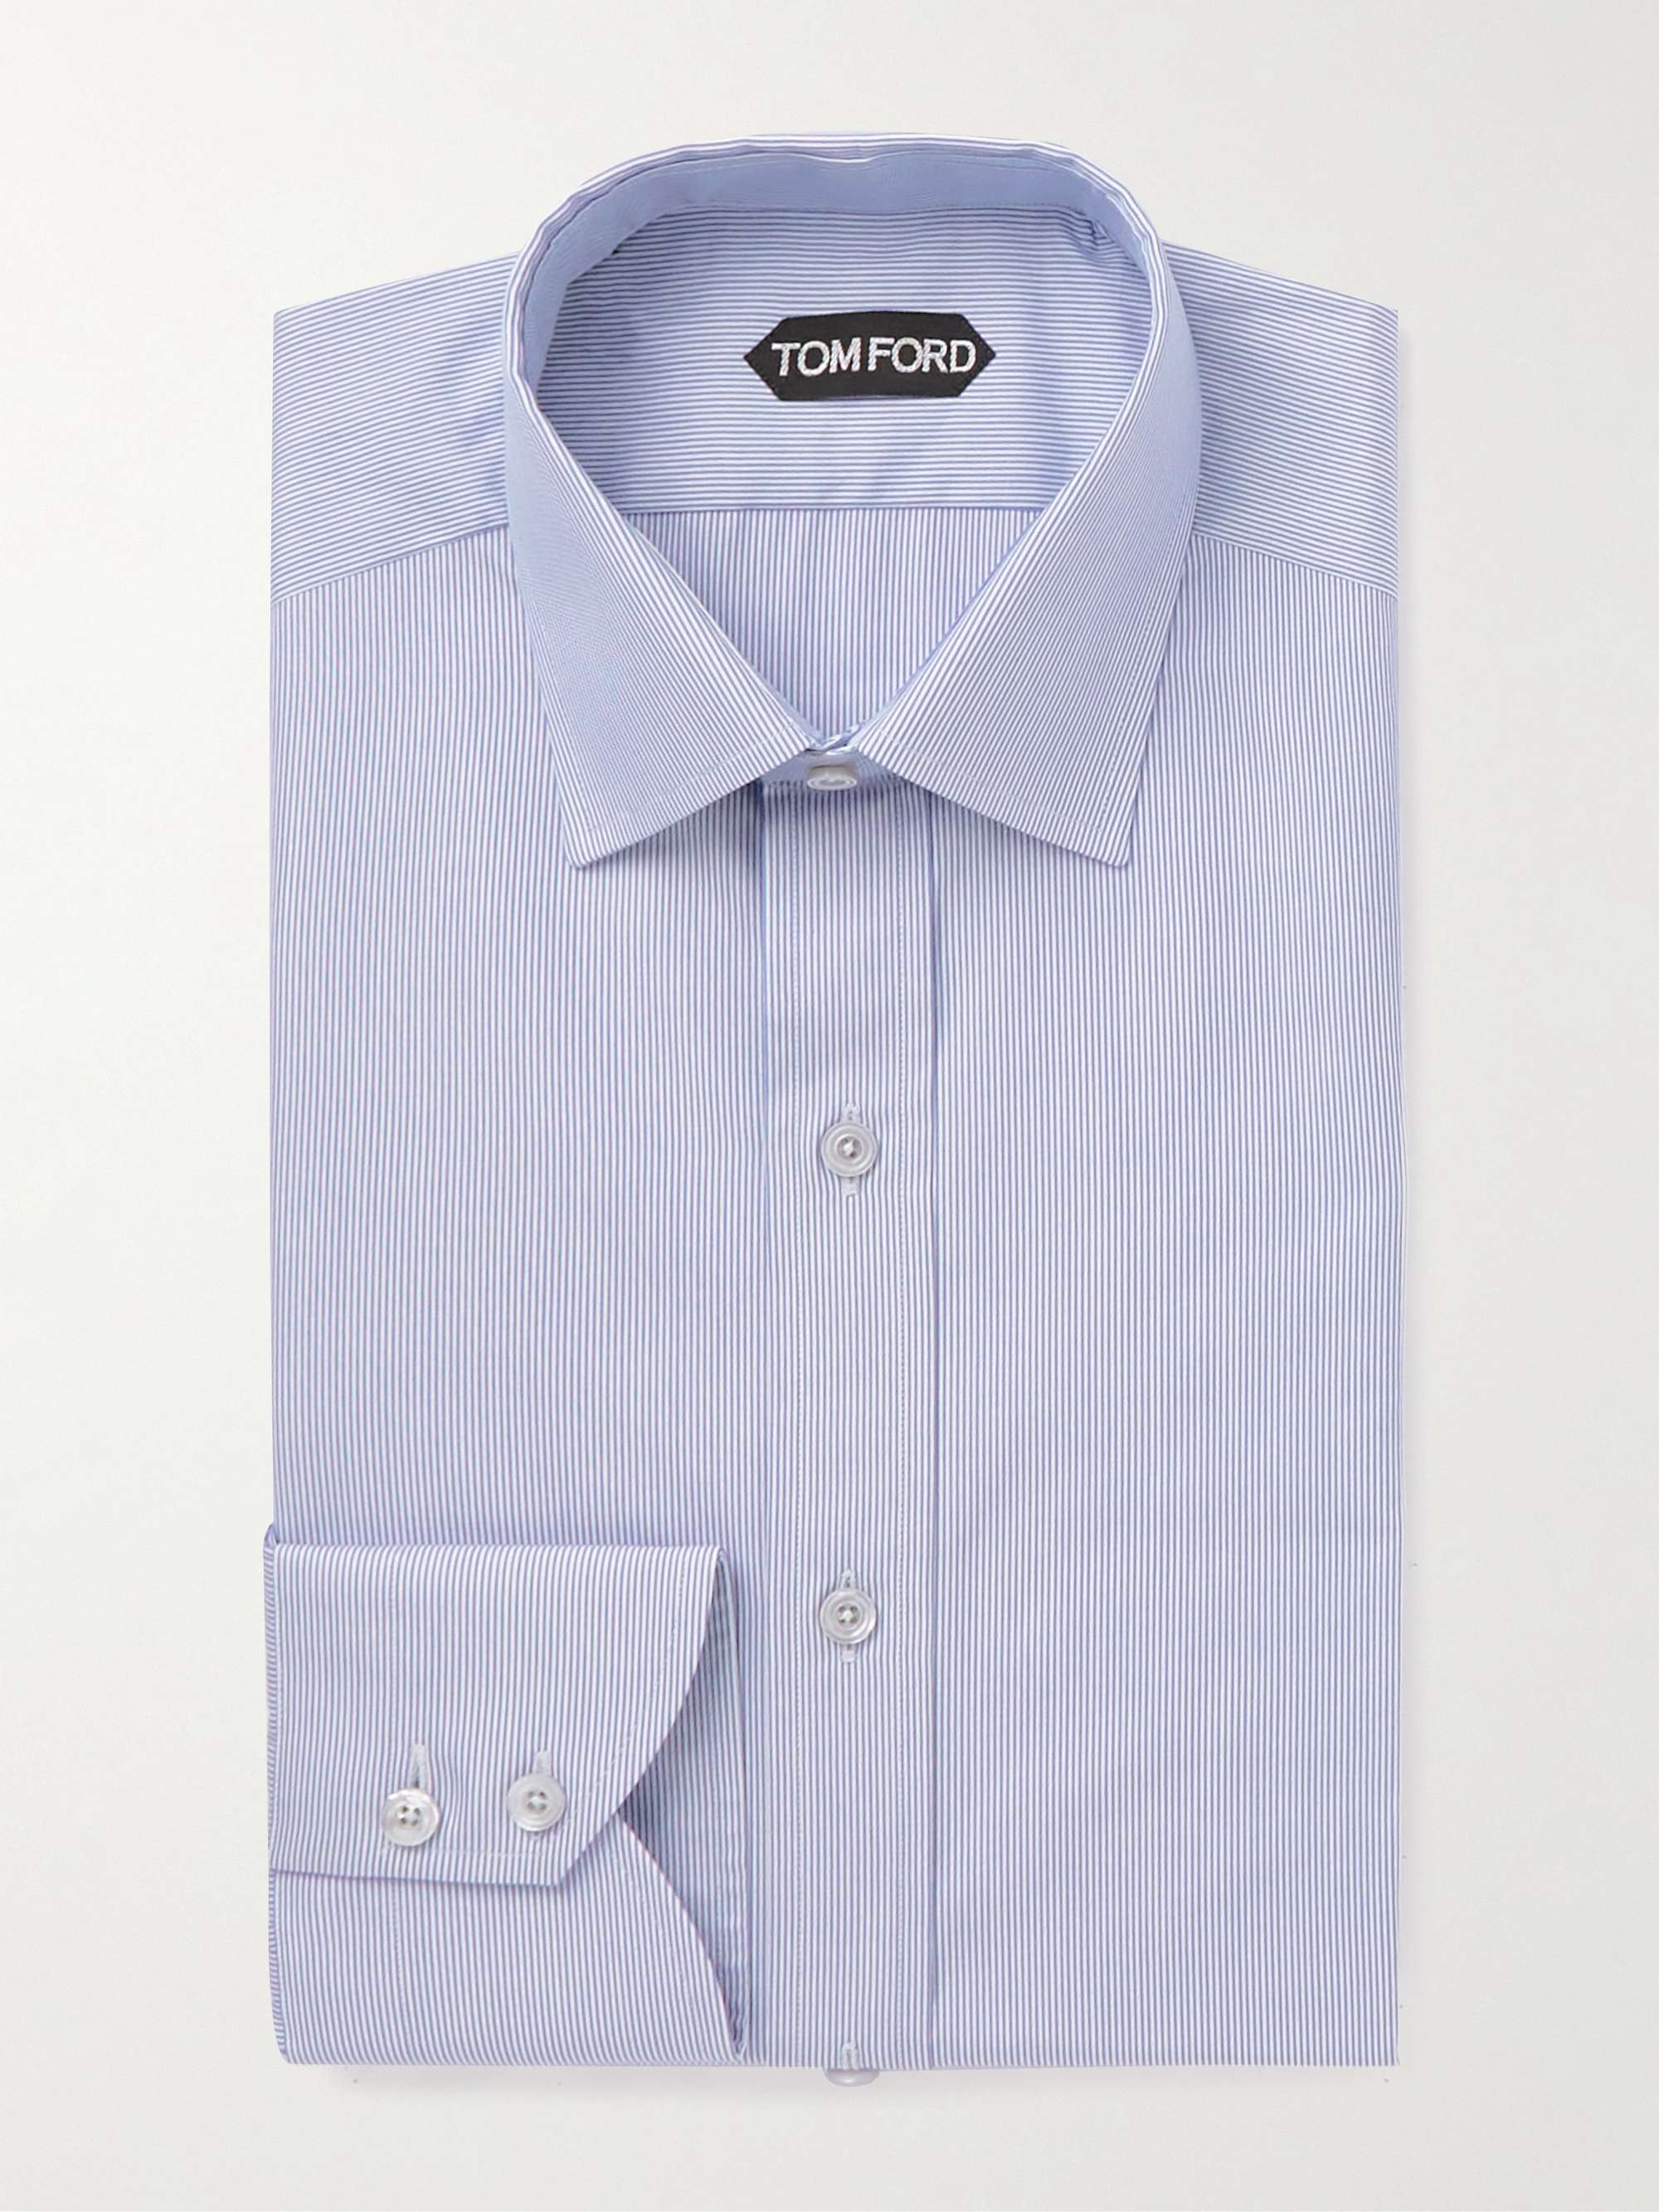 TOM FORD Striped Cotton-Poplin Shirt